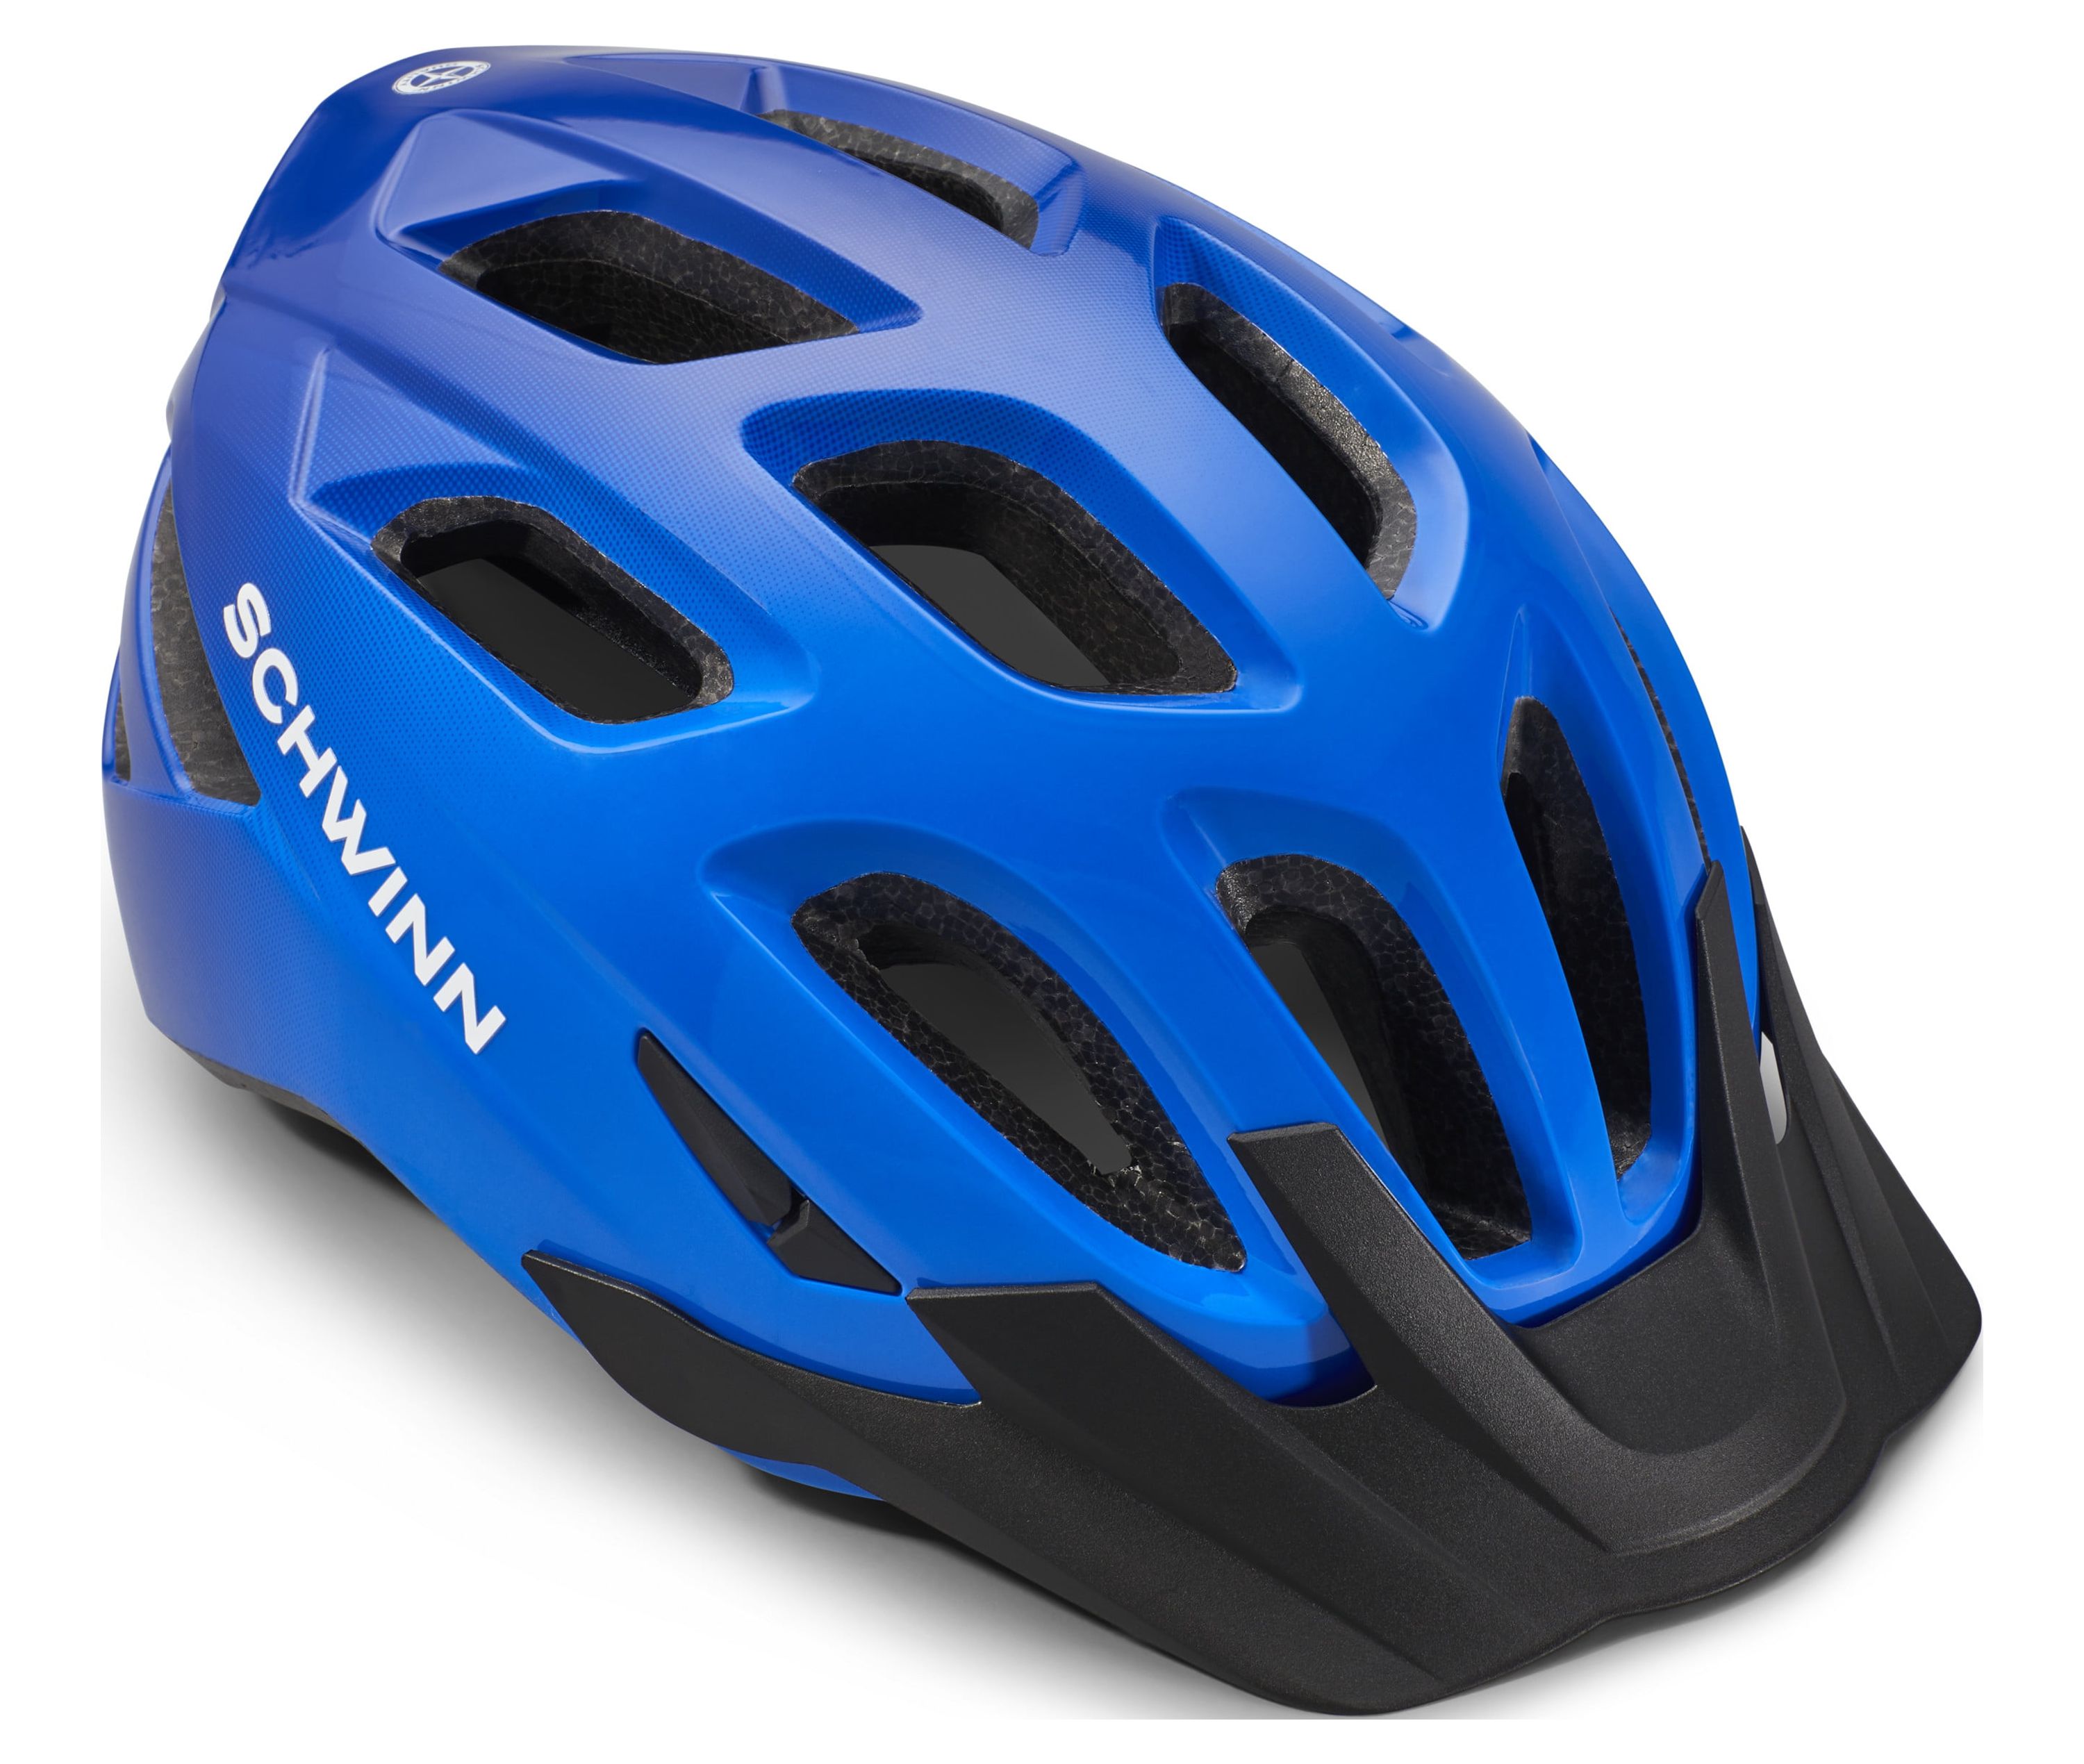 Schwinn Outlook Adult Helmet, Ages 14+, Blue - image 1 of 6